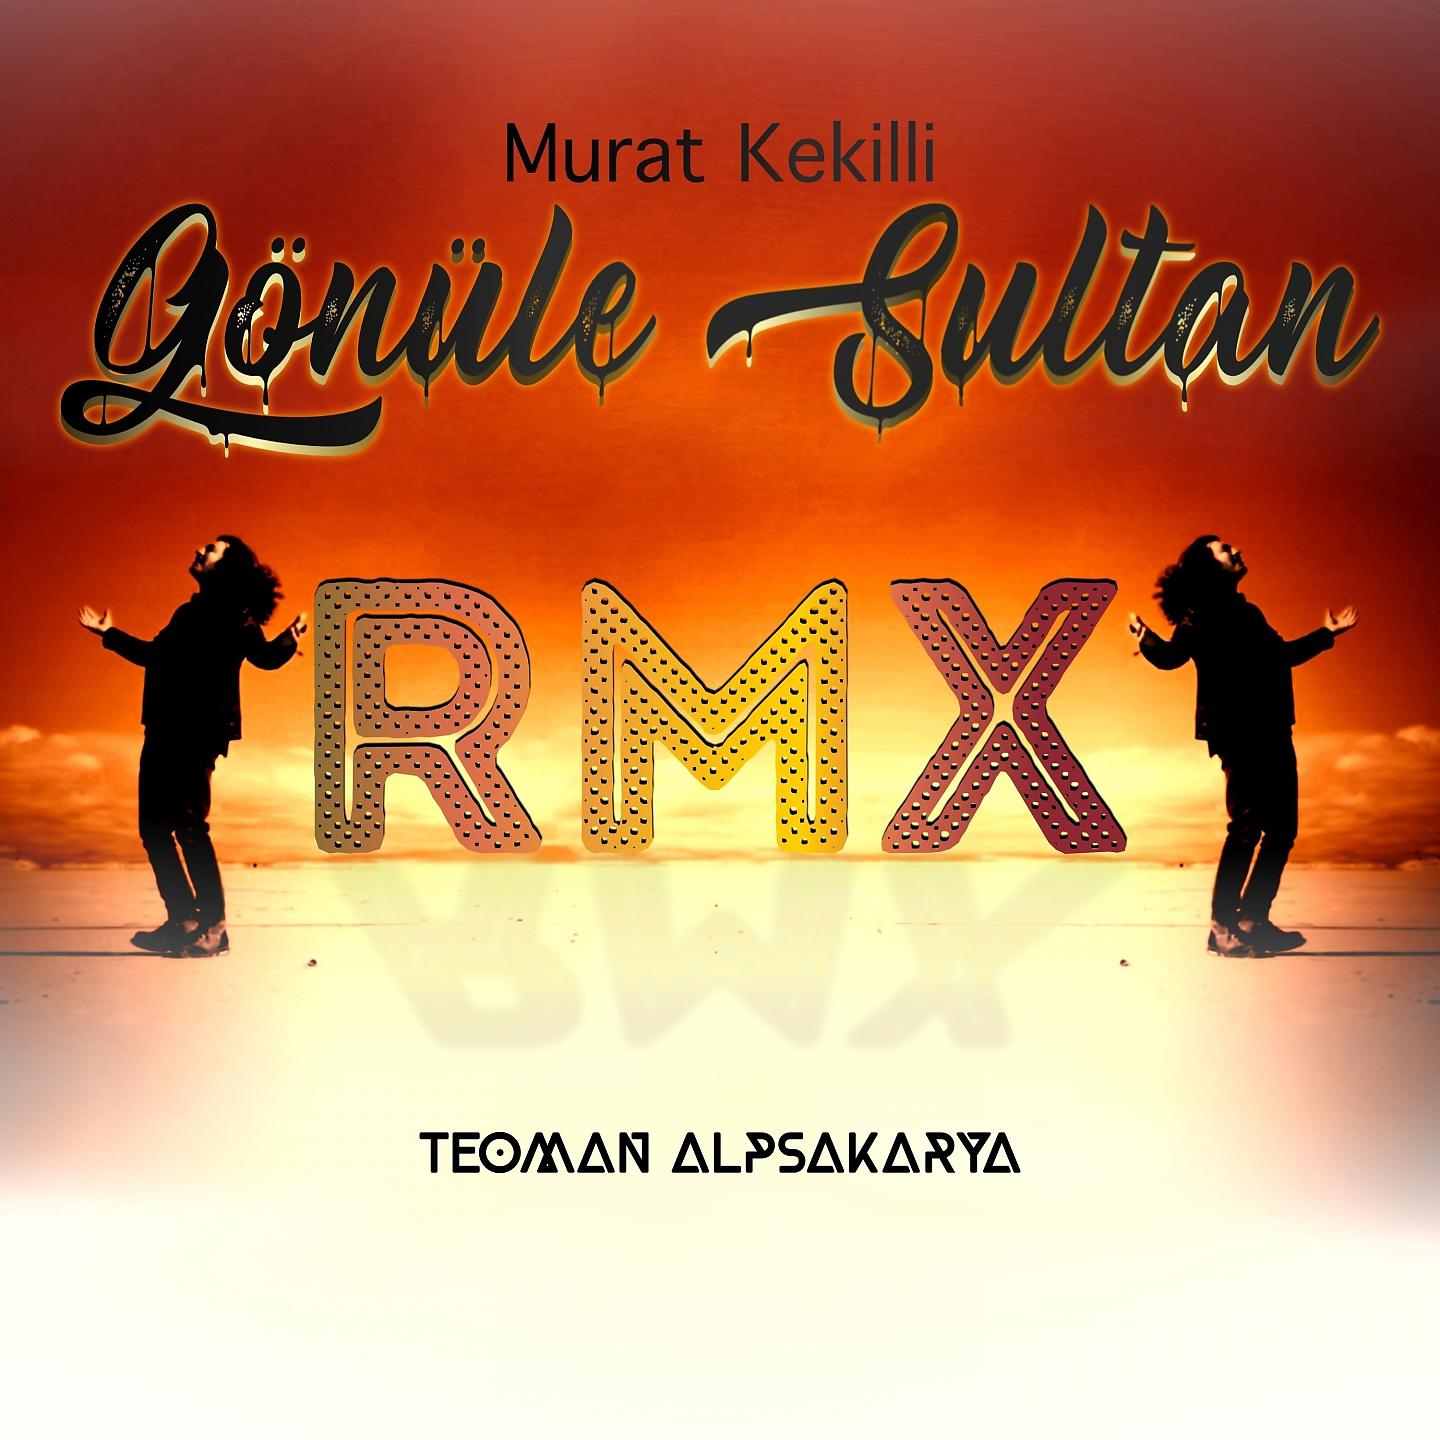 Постер альбома Gönüle Sultan